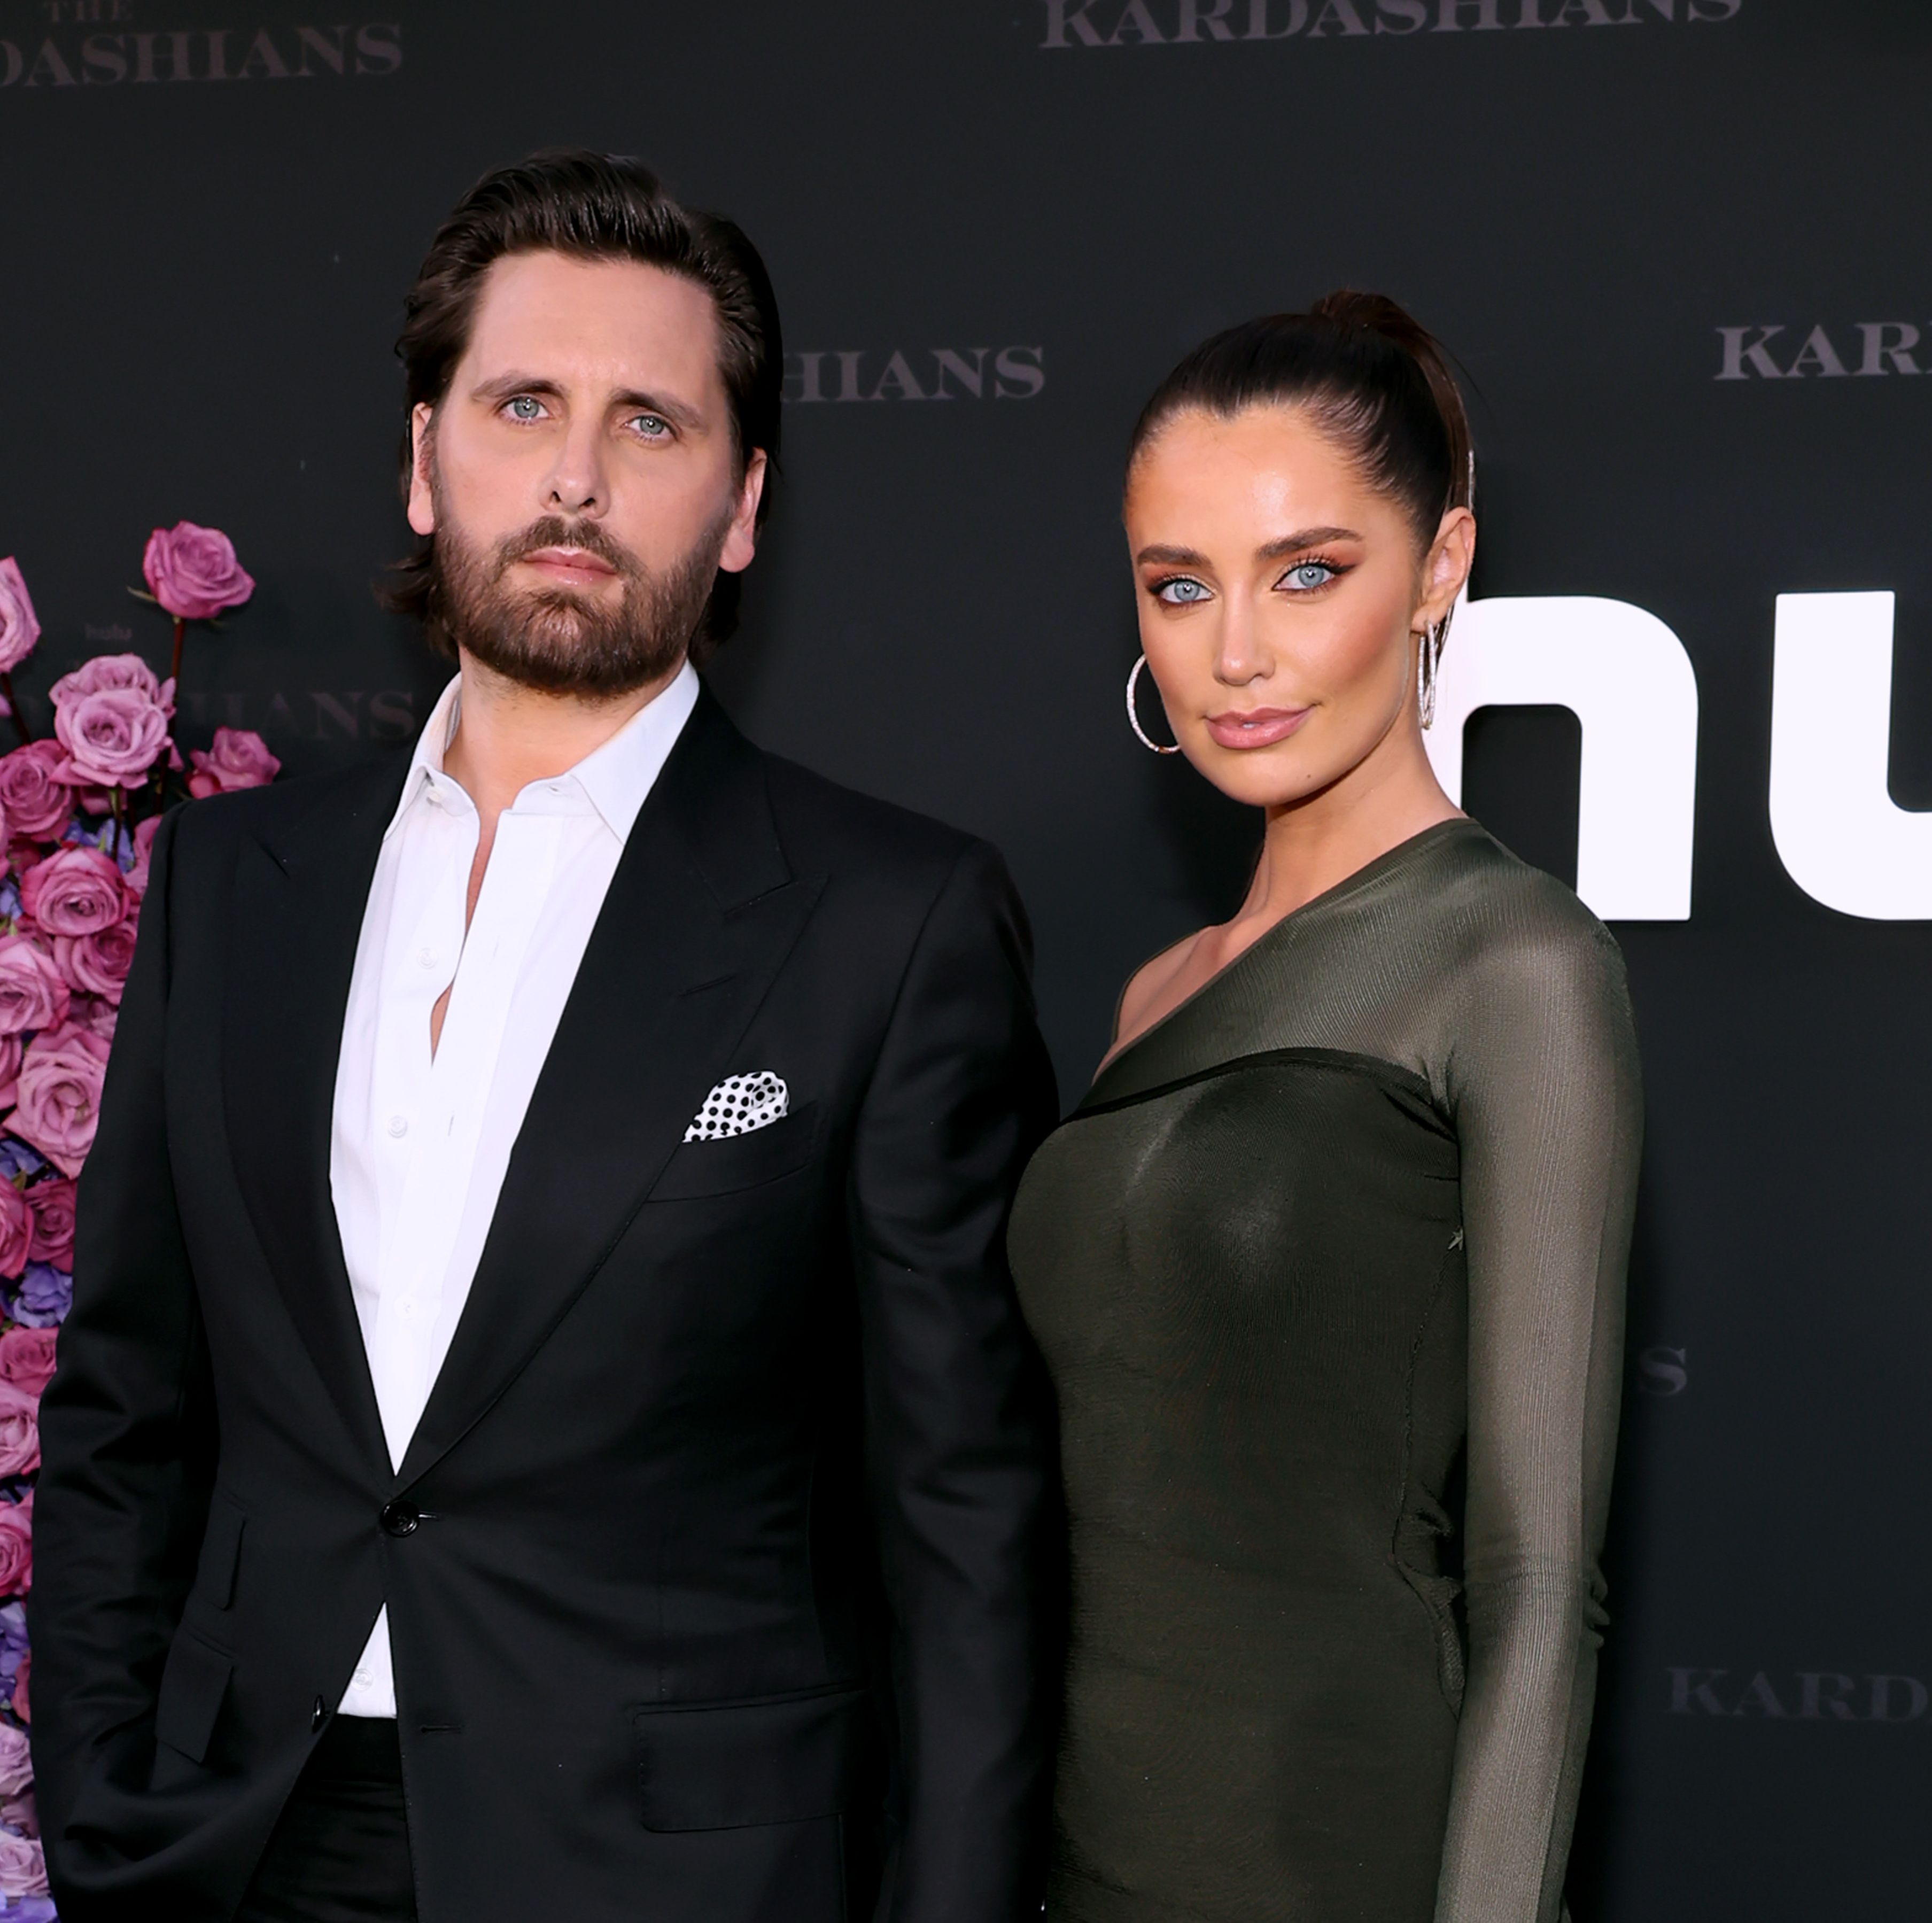 Scott Disick Brings Brand New Girlfriend to 'Kardashians' Premiere While Kravis Hit the Carpet